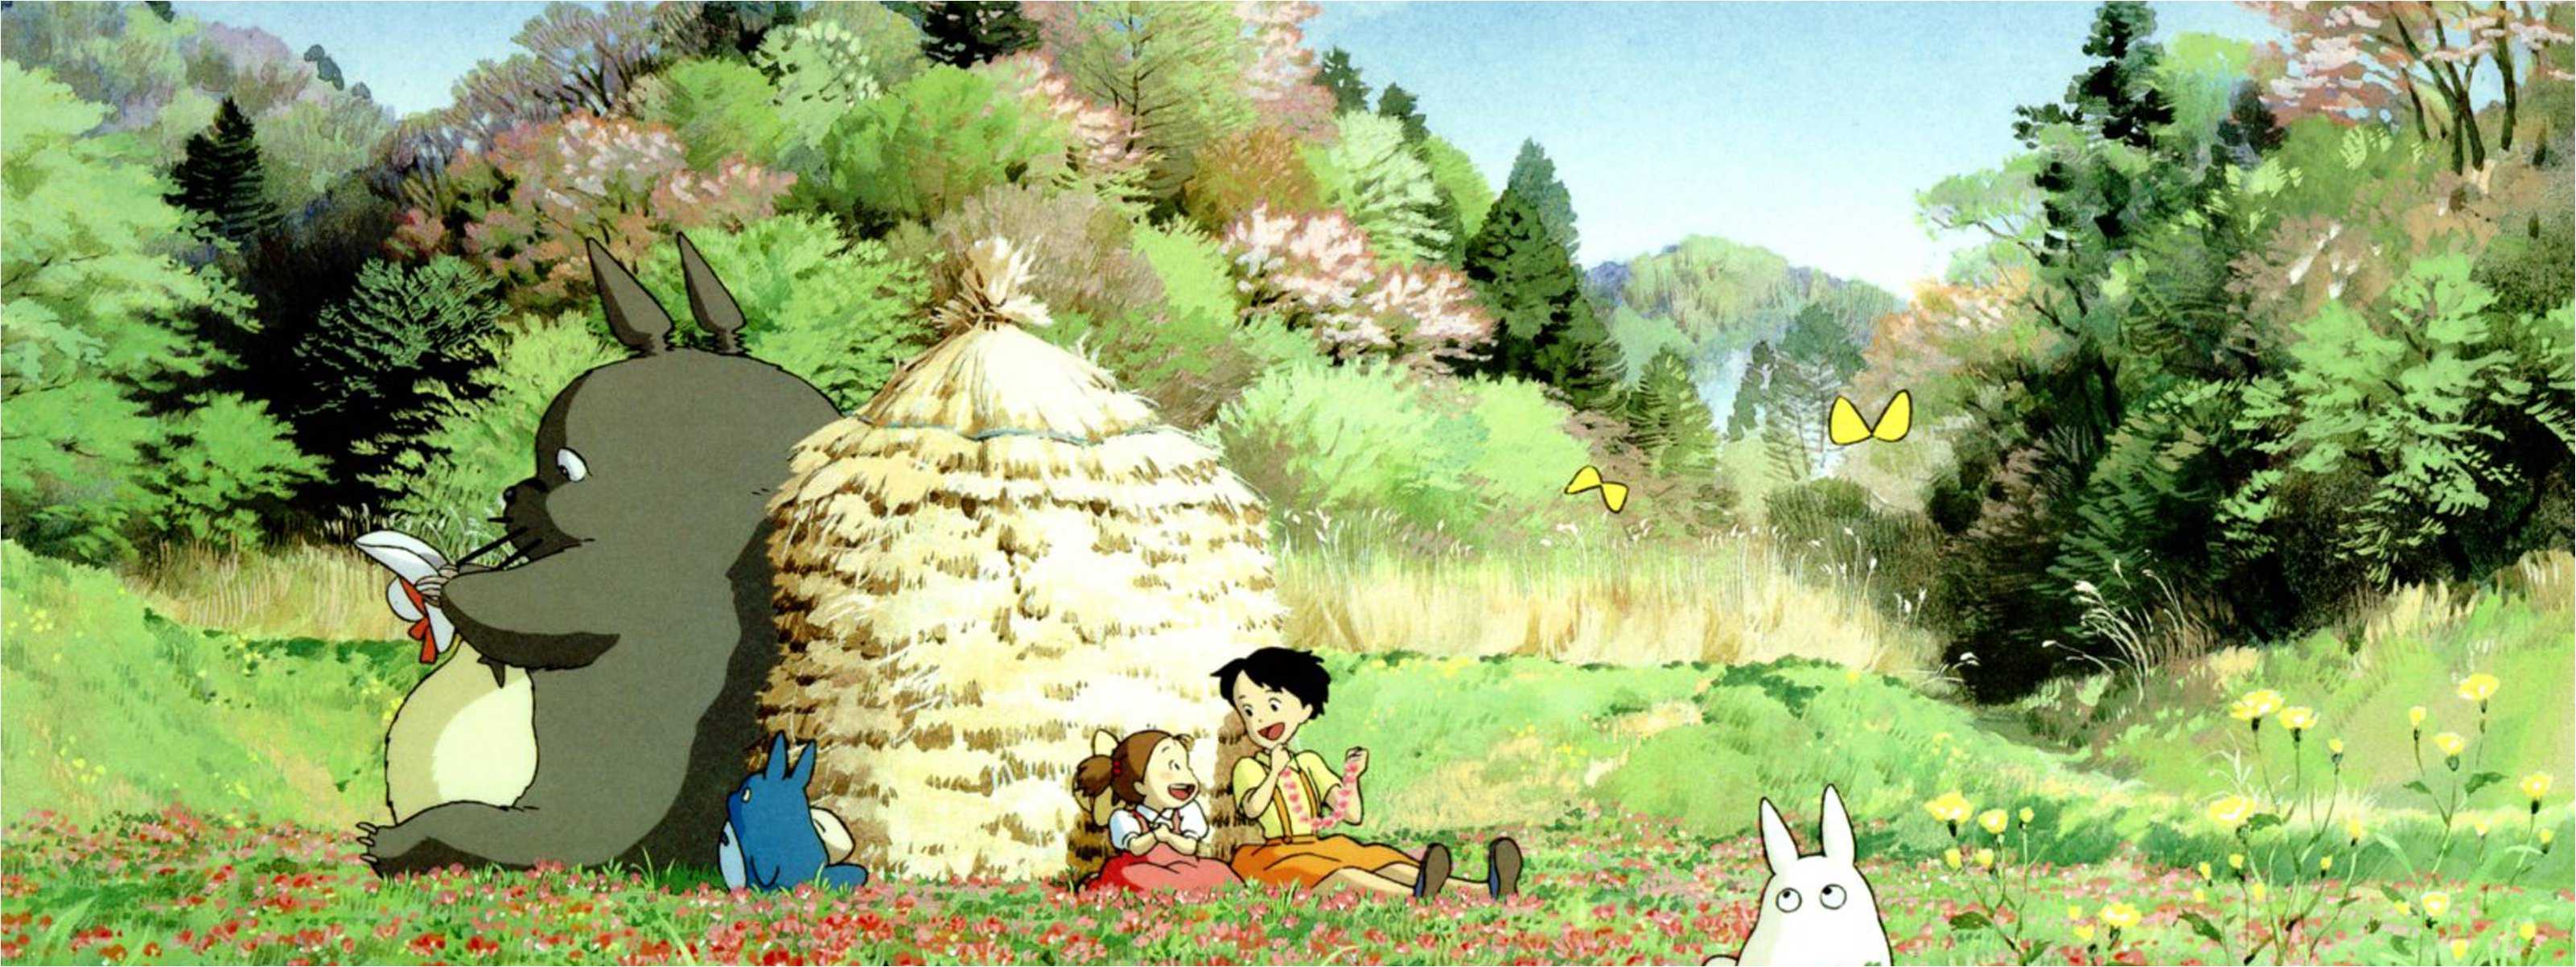 Download Download In Original Resolution - Studio Ghibli Wallpaper 4k On Itl.cat